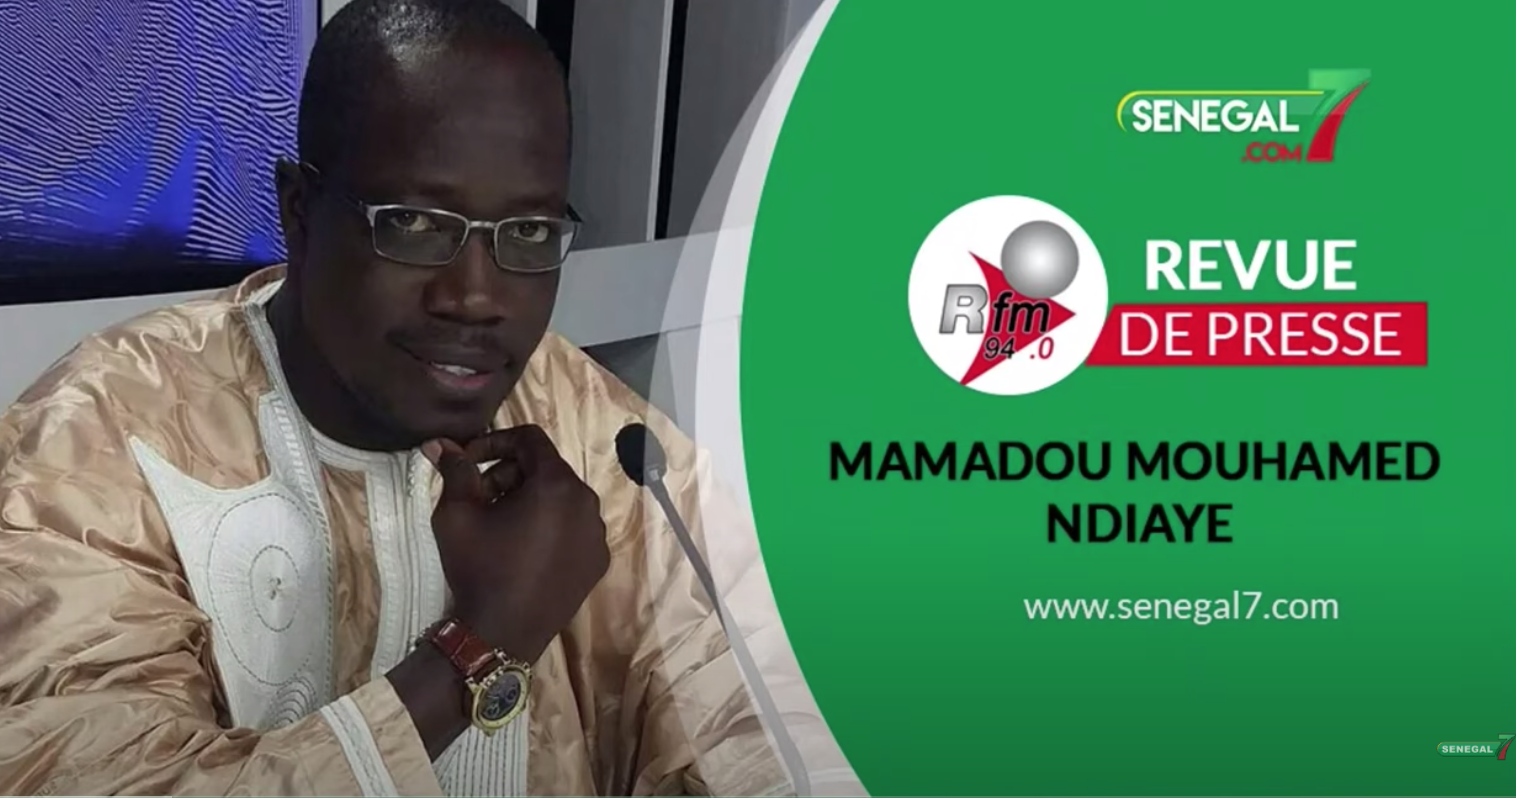 Revue de presse (wolof) Rfm du Lundi 06 septembre 2021 avec Mamadou Mouhamed Ndiaye